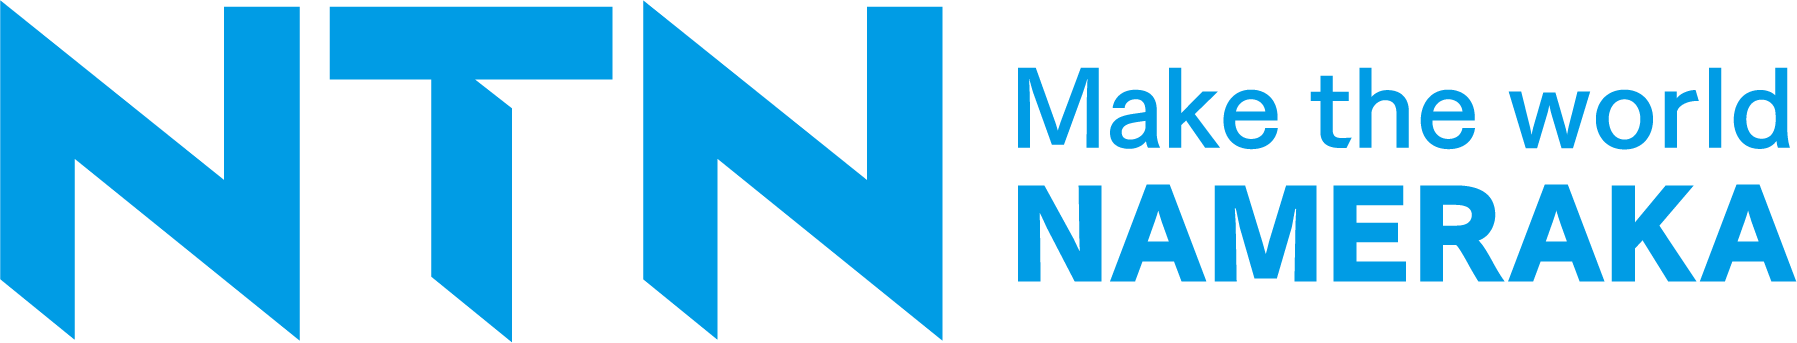 082 ntn logo 1